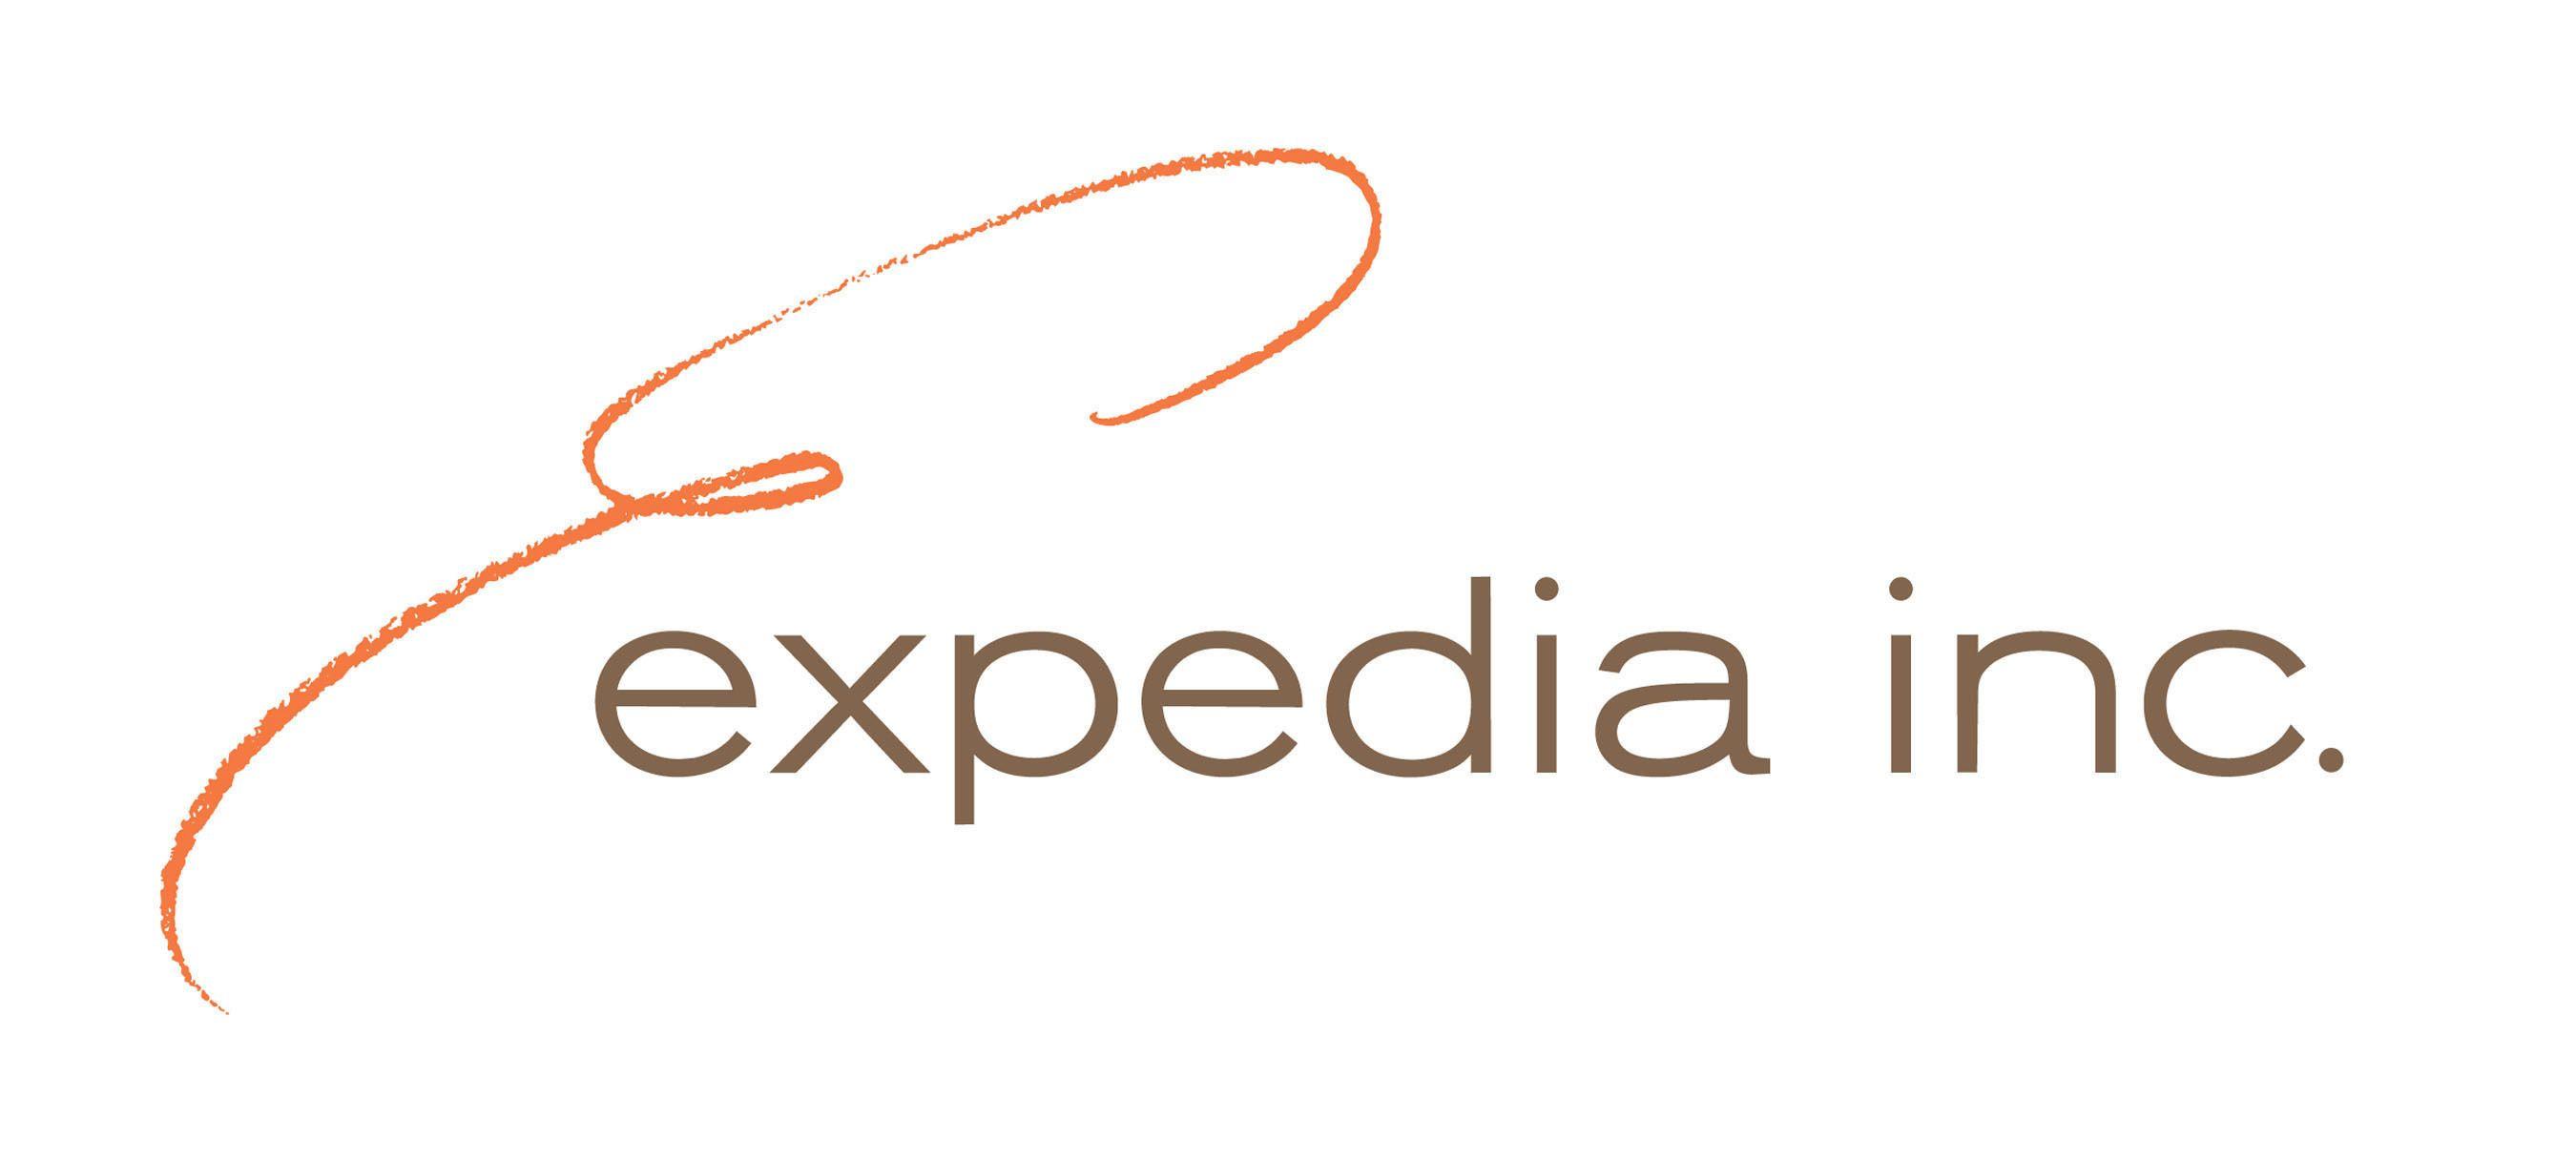 Expedia Inc. Logo - Expedia, Inc. Announces Conference Participation for June 2016